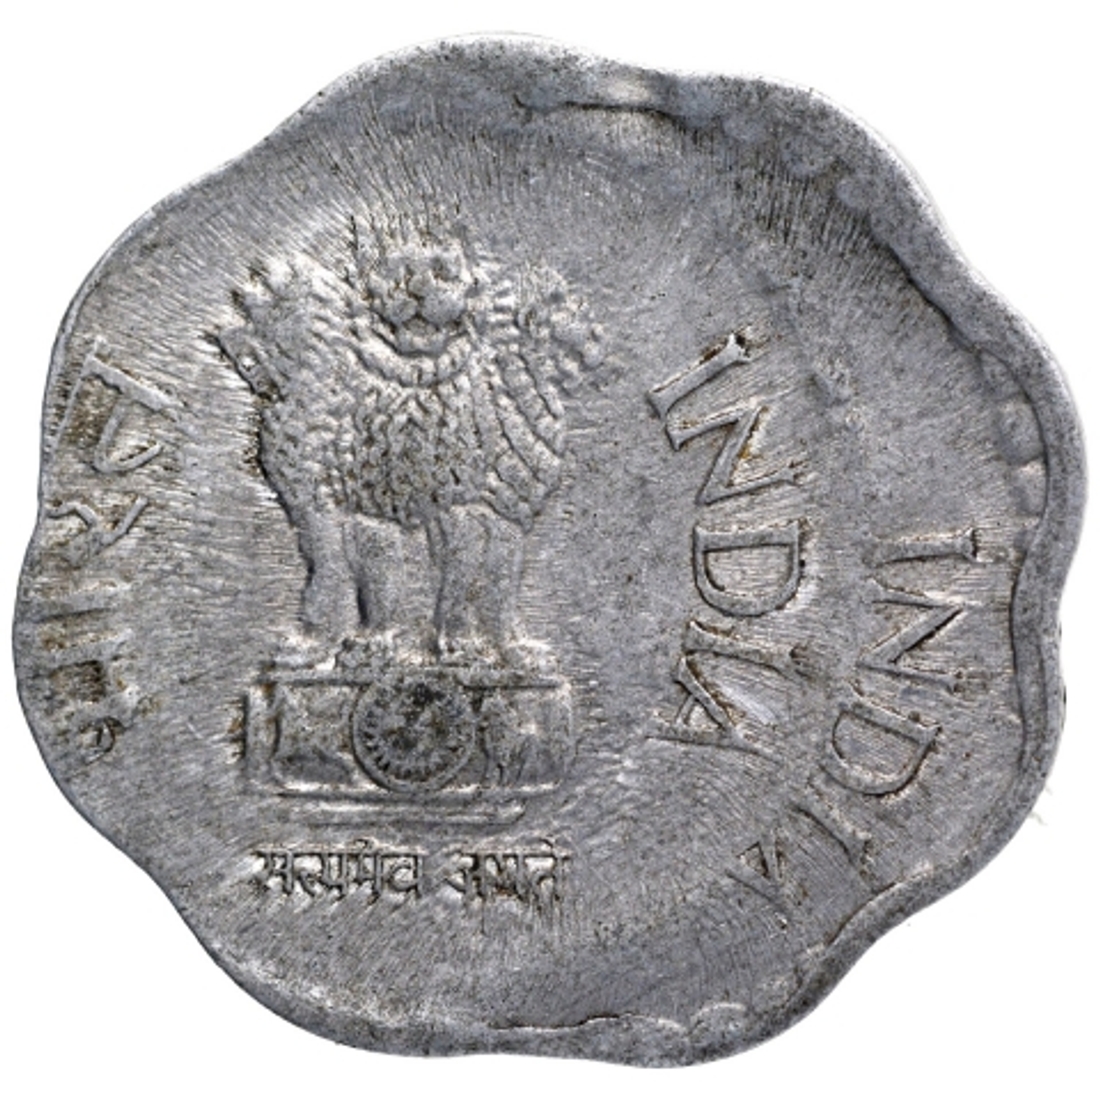 Flip Double Strike Error Aluminium Ten Paise Coin of Republic India of 1986.